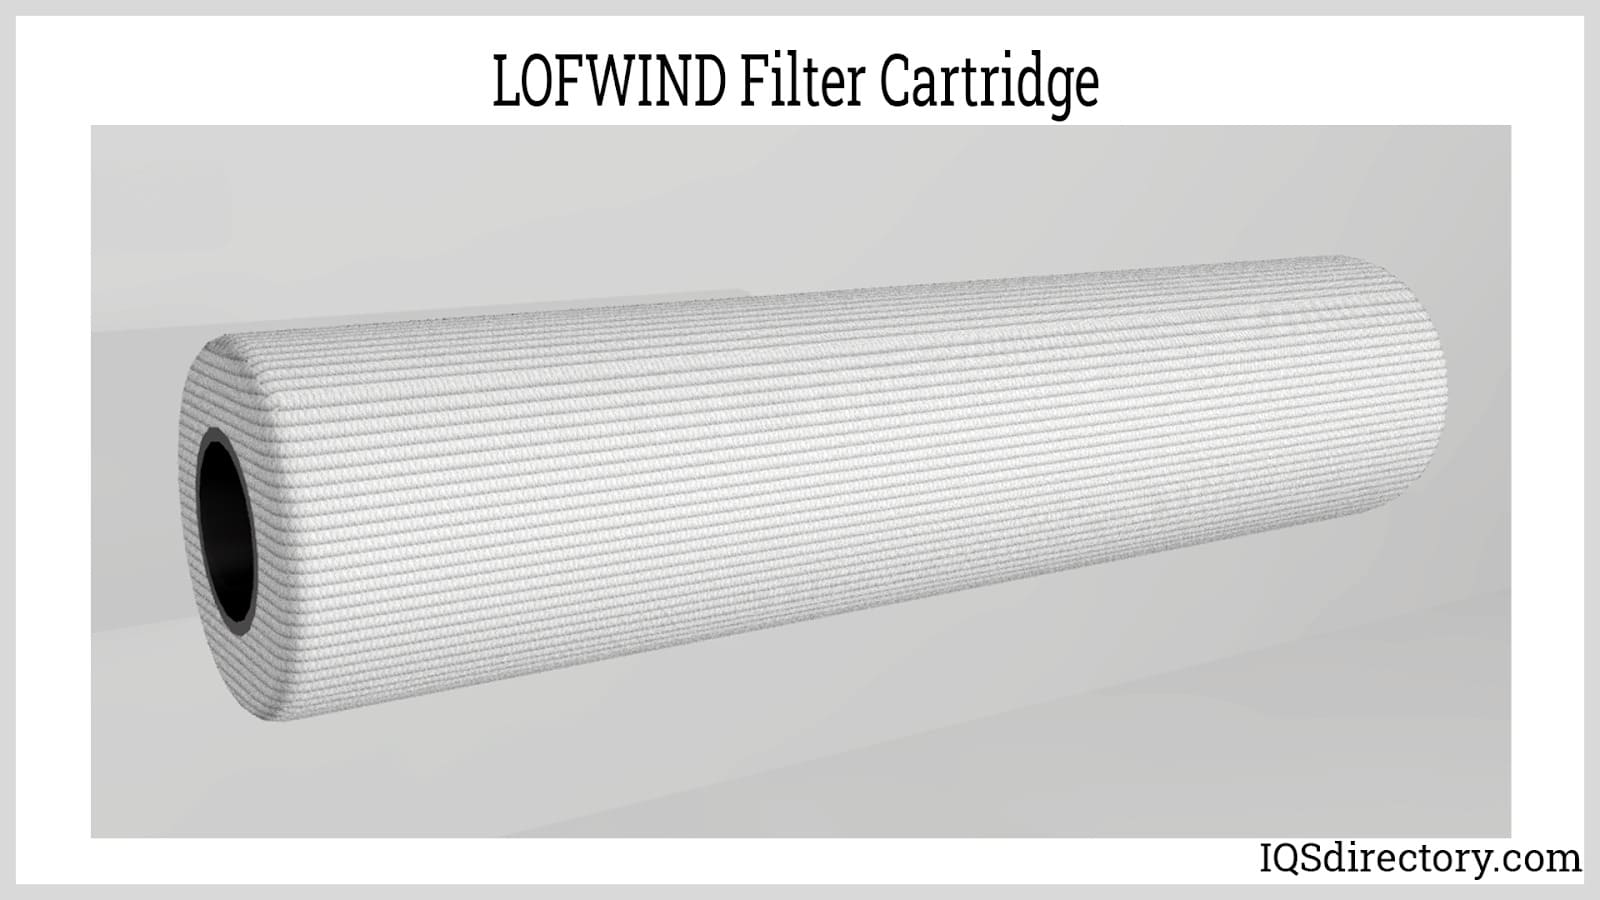 LOFWIND Filter Cartridge